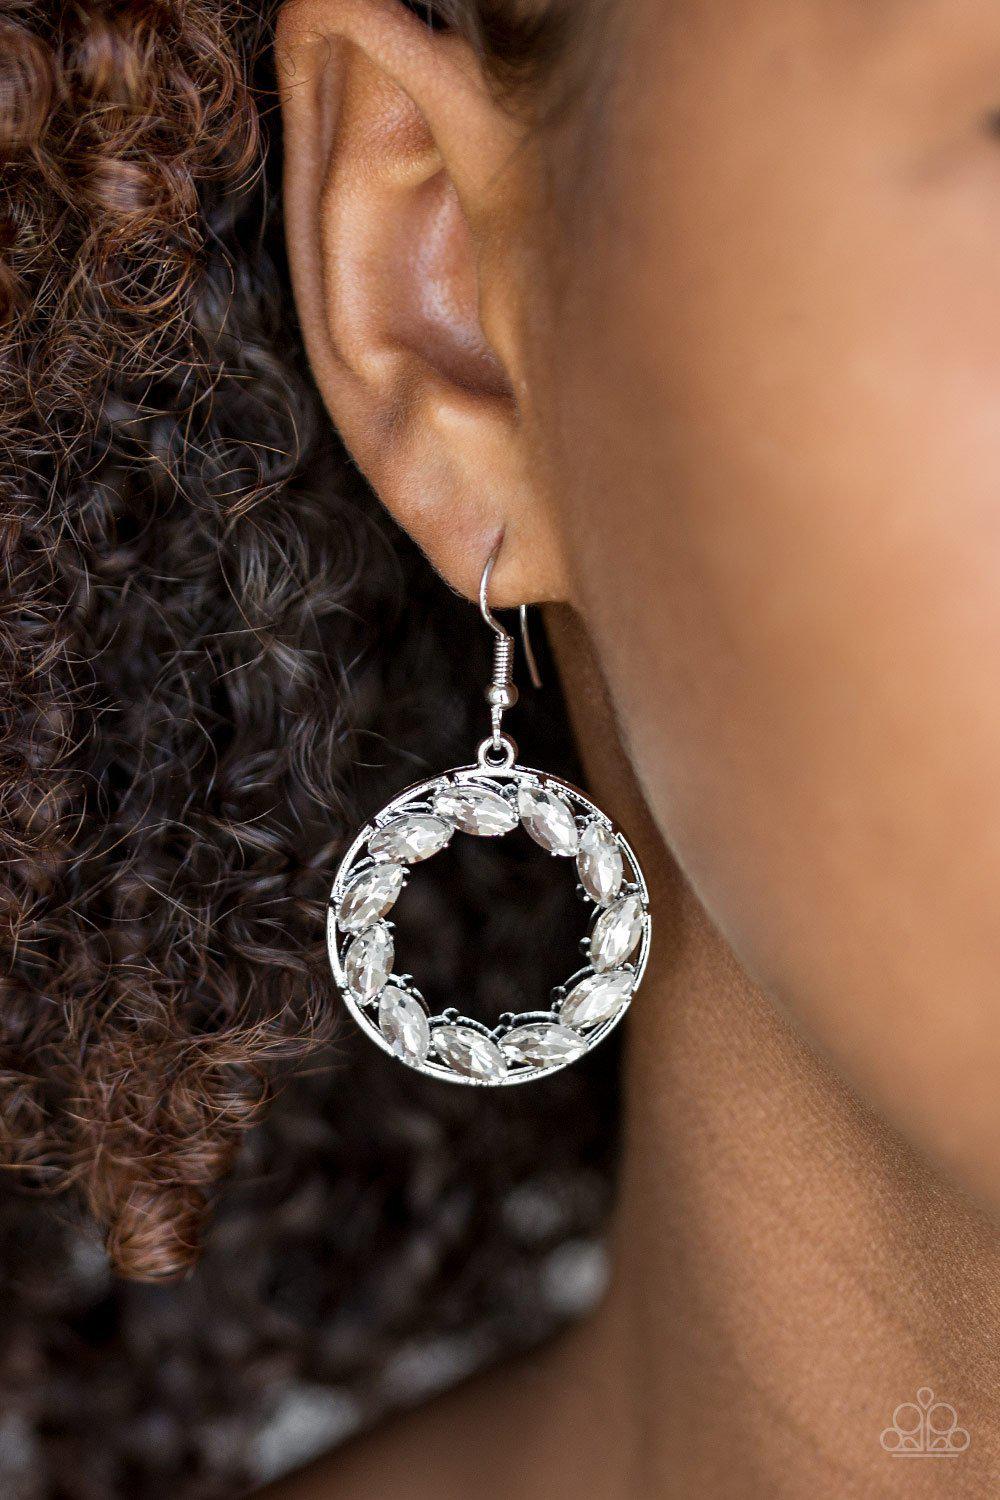 Global Glow White Rhinestone Earrings - Paparazzi Accessories-CarasShop.com - $5 Jewelry by Cara Jewels